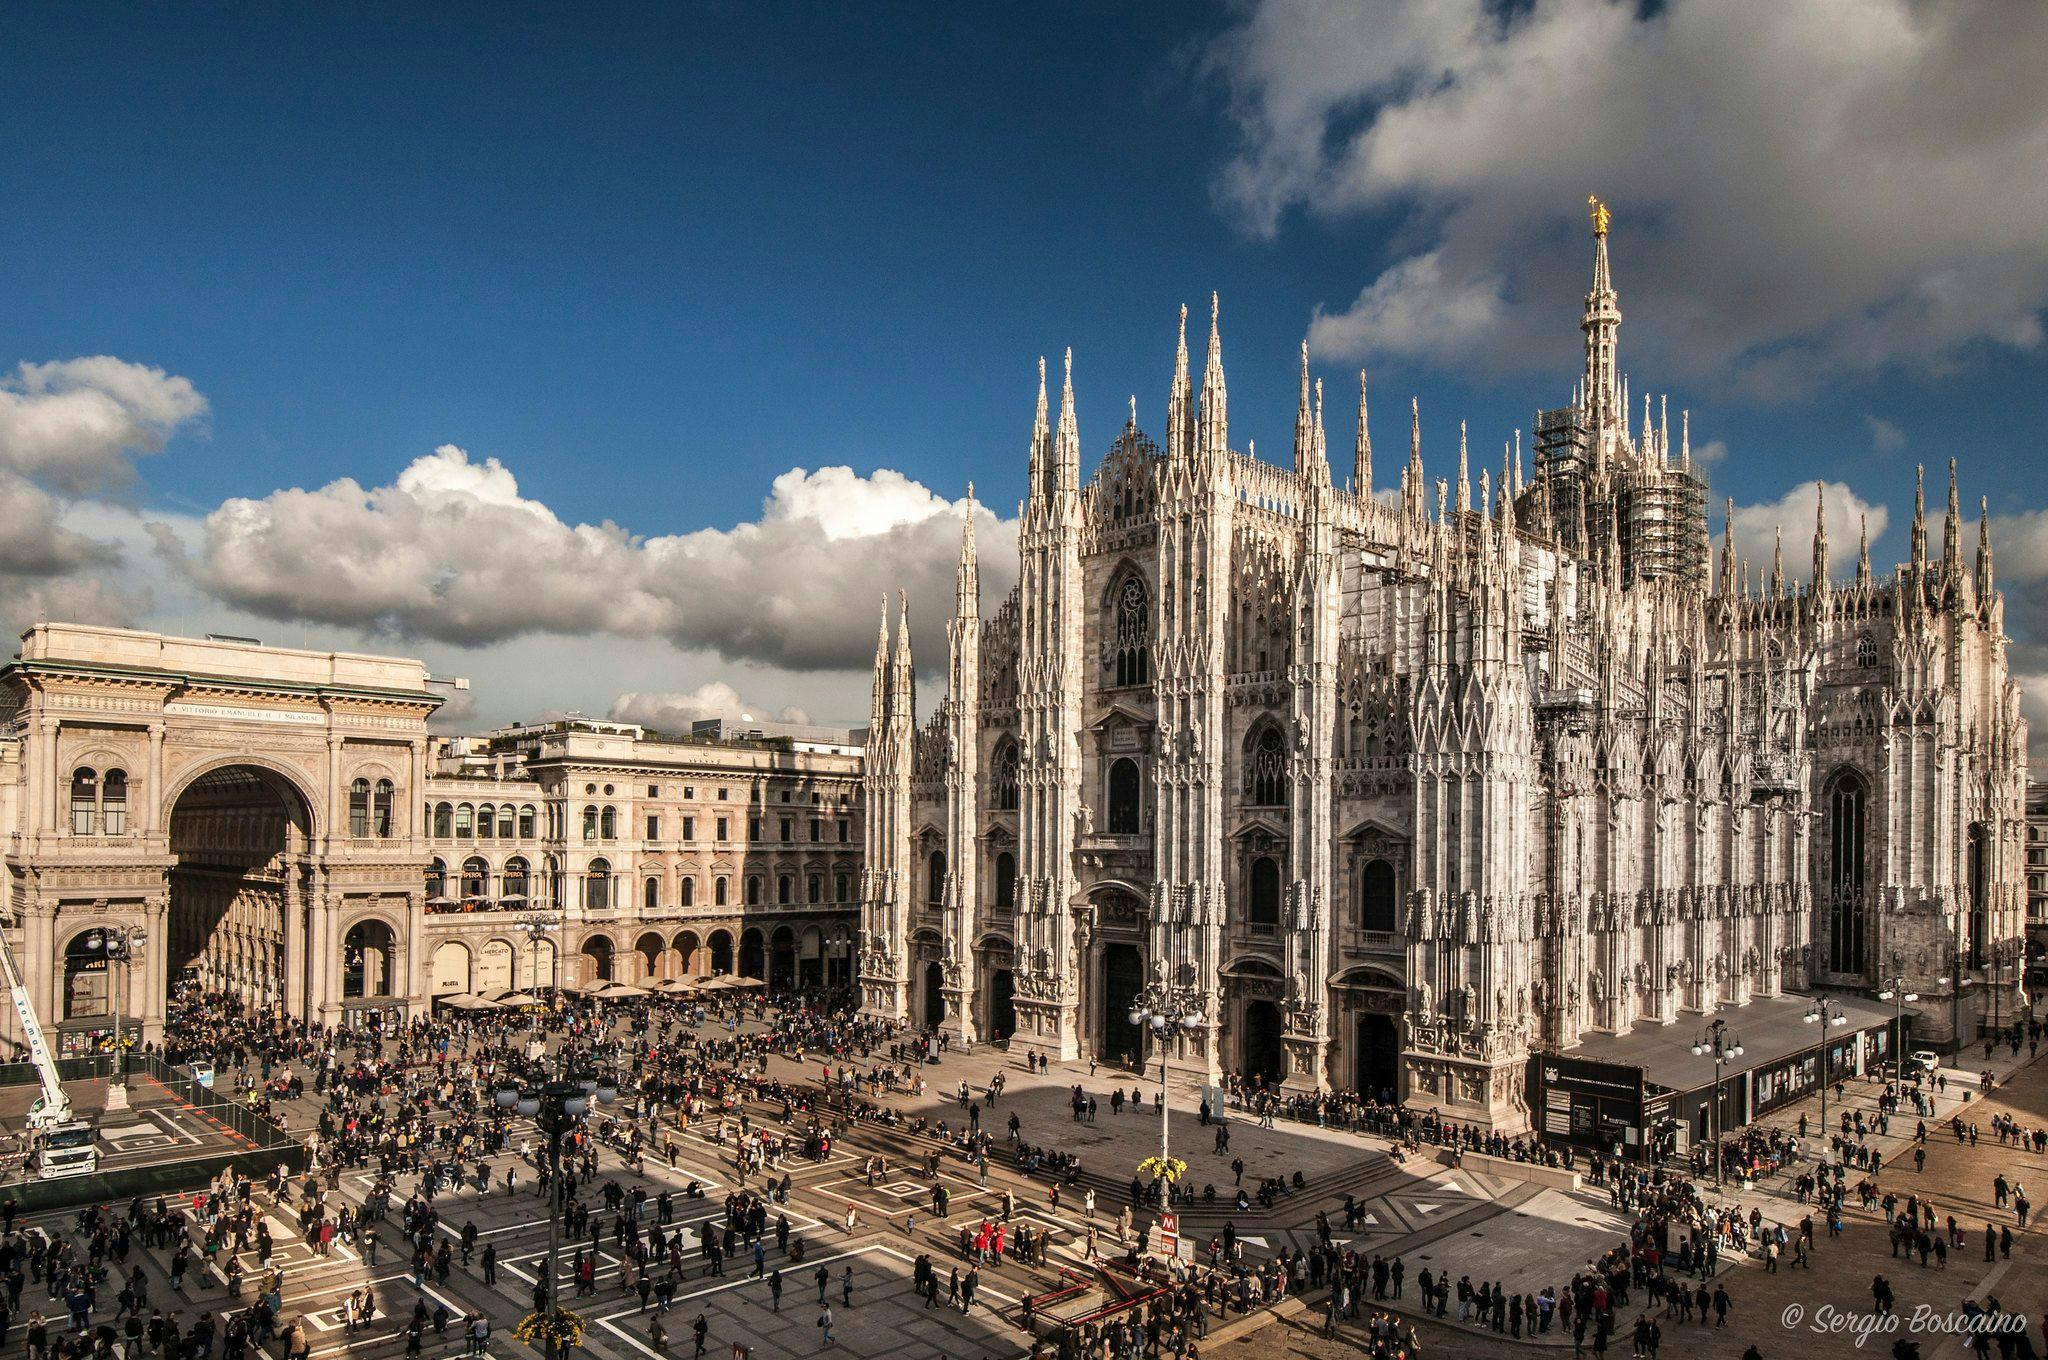 Duomo of Milan (by Sergio Boscaino, CC BY 2.0 via Flickr)